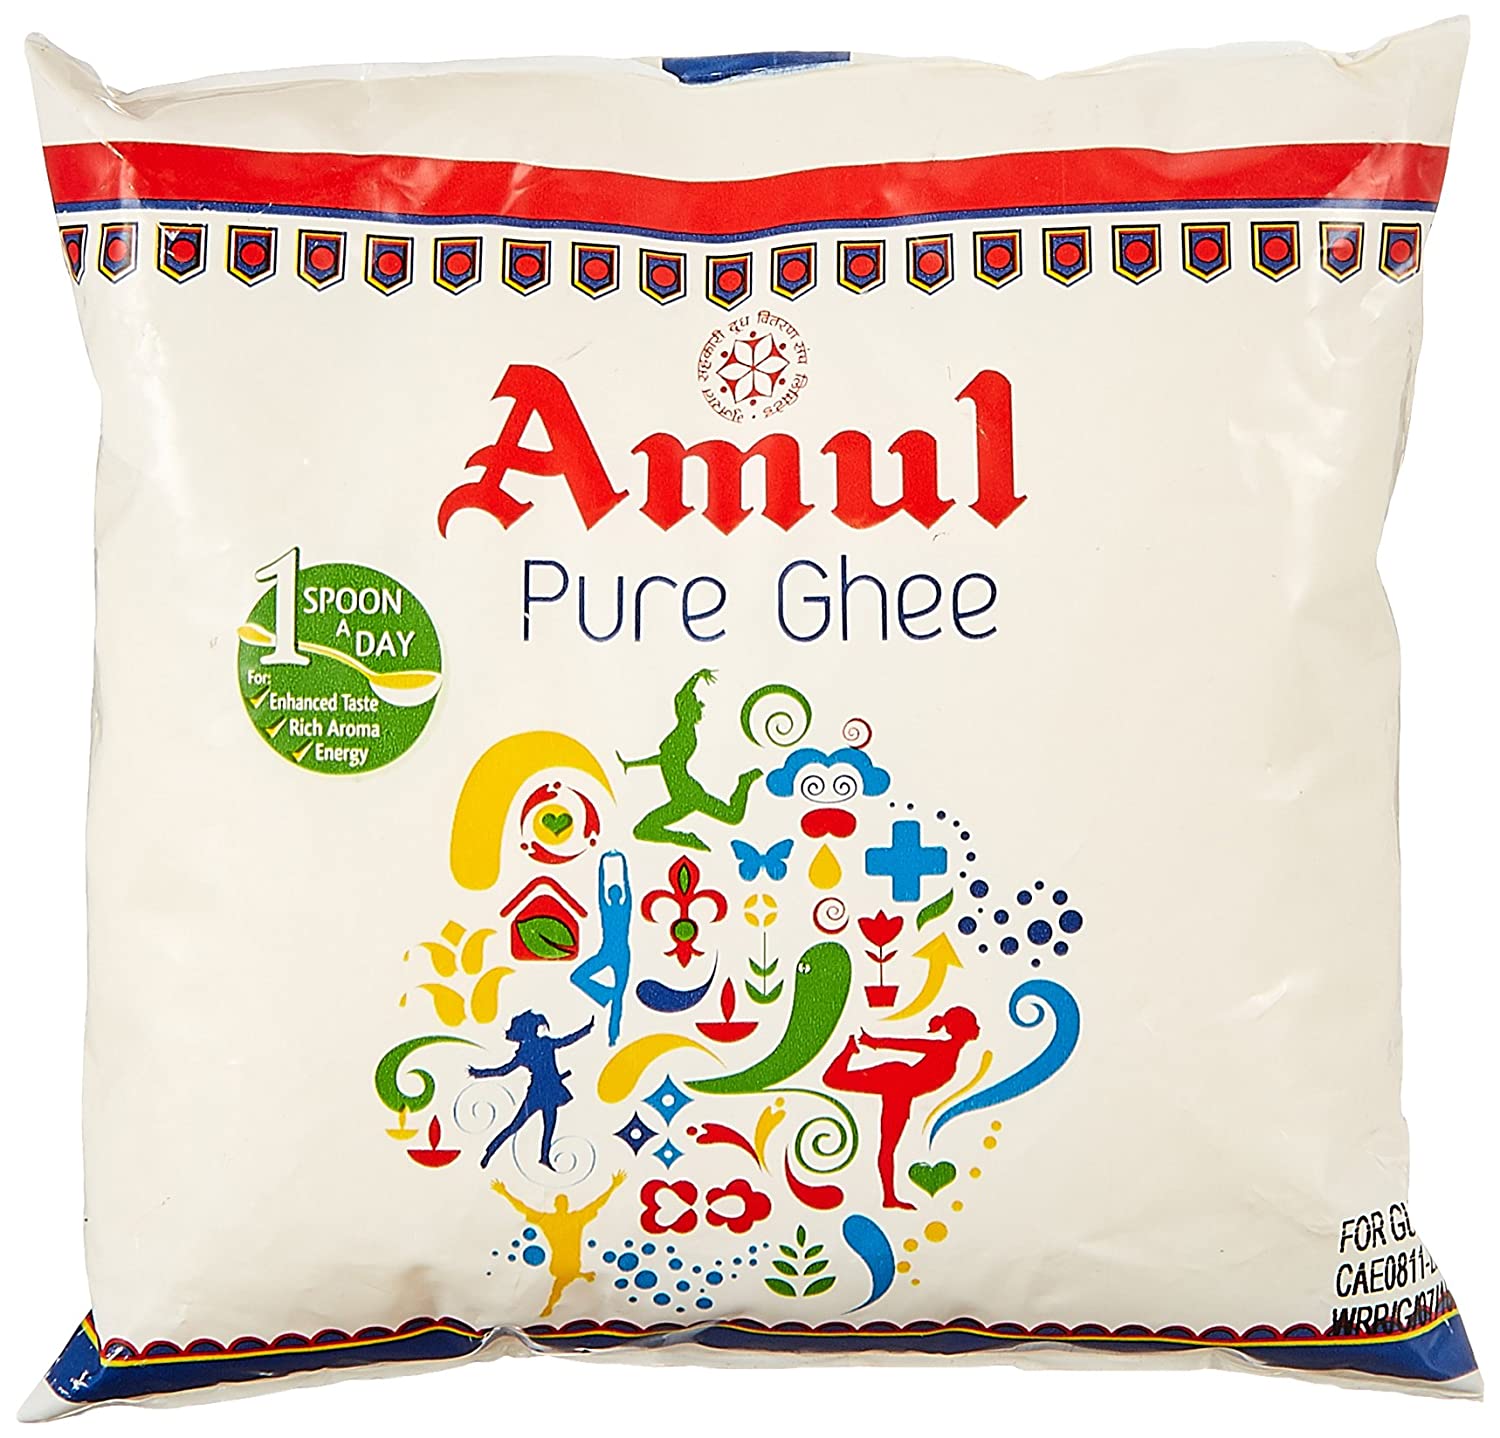 Amul Pure Ghee, 500ml Pouch